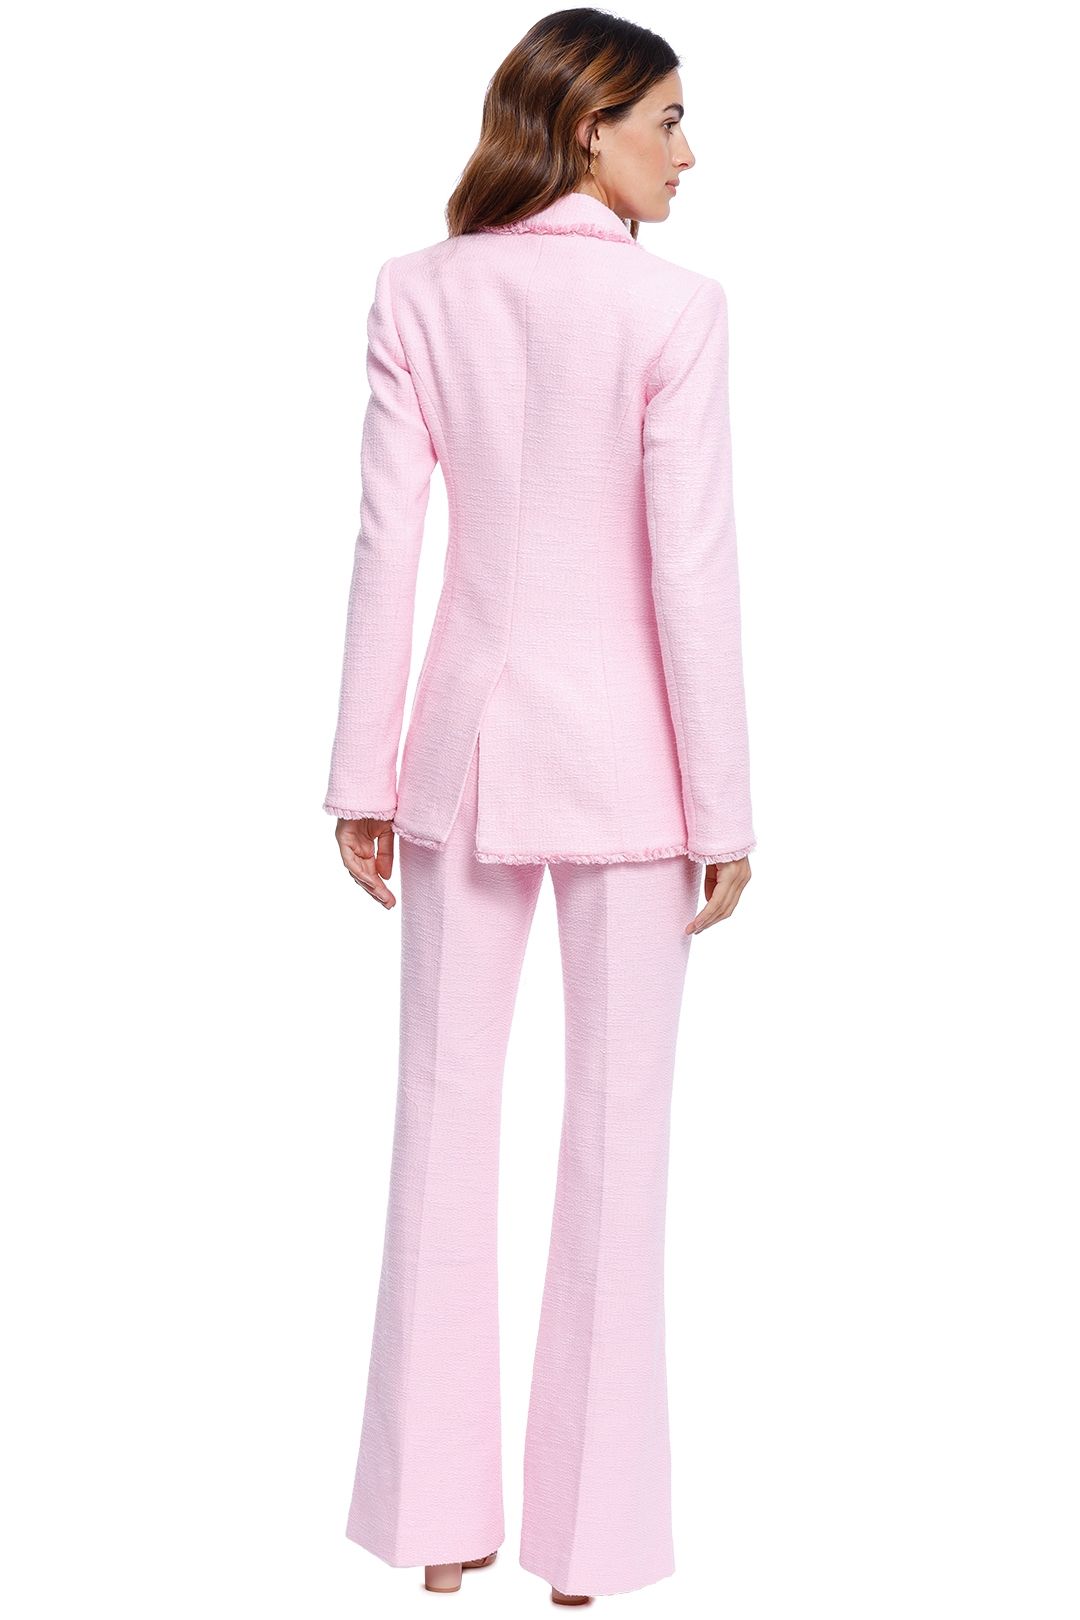 Rebecca Vallance Garance Jacket and Pant Set Pink Blush